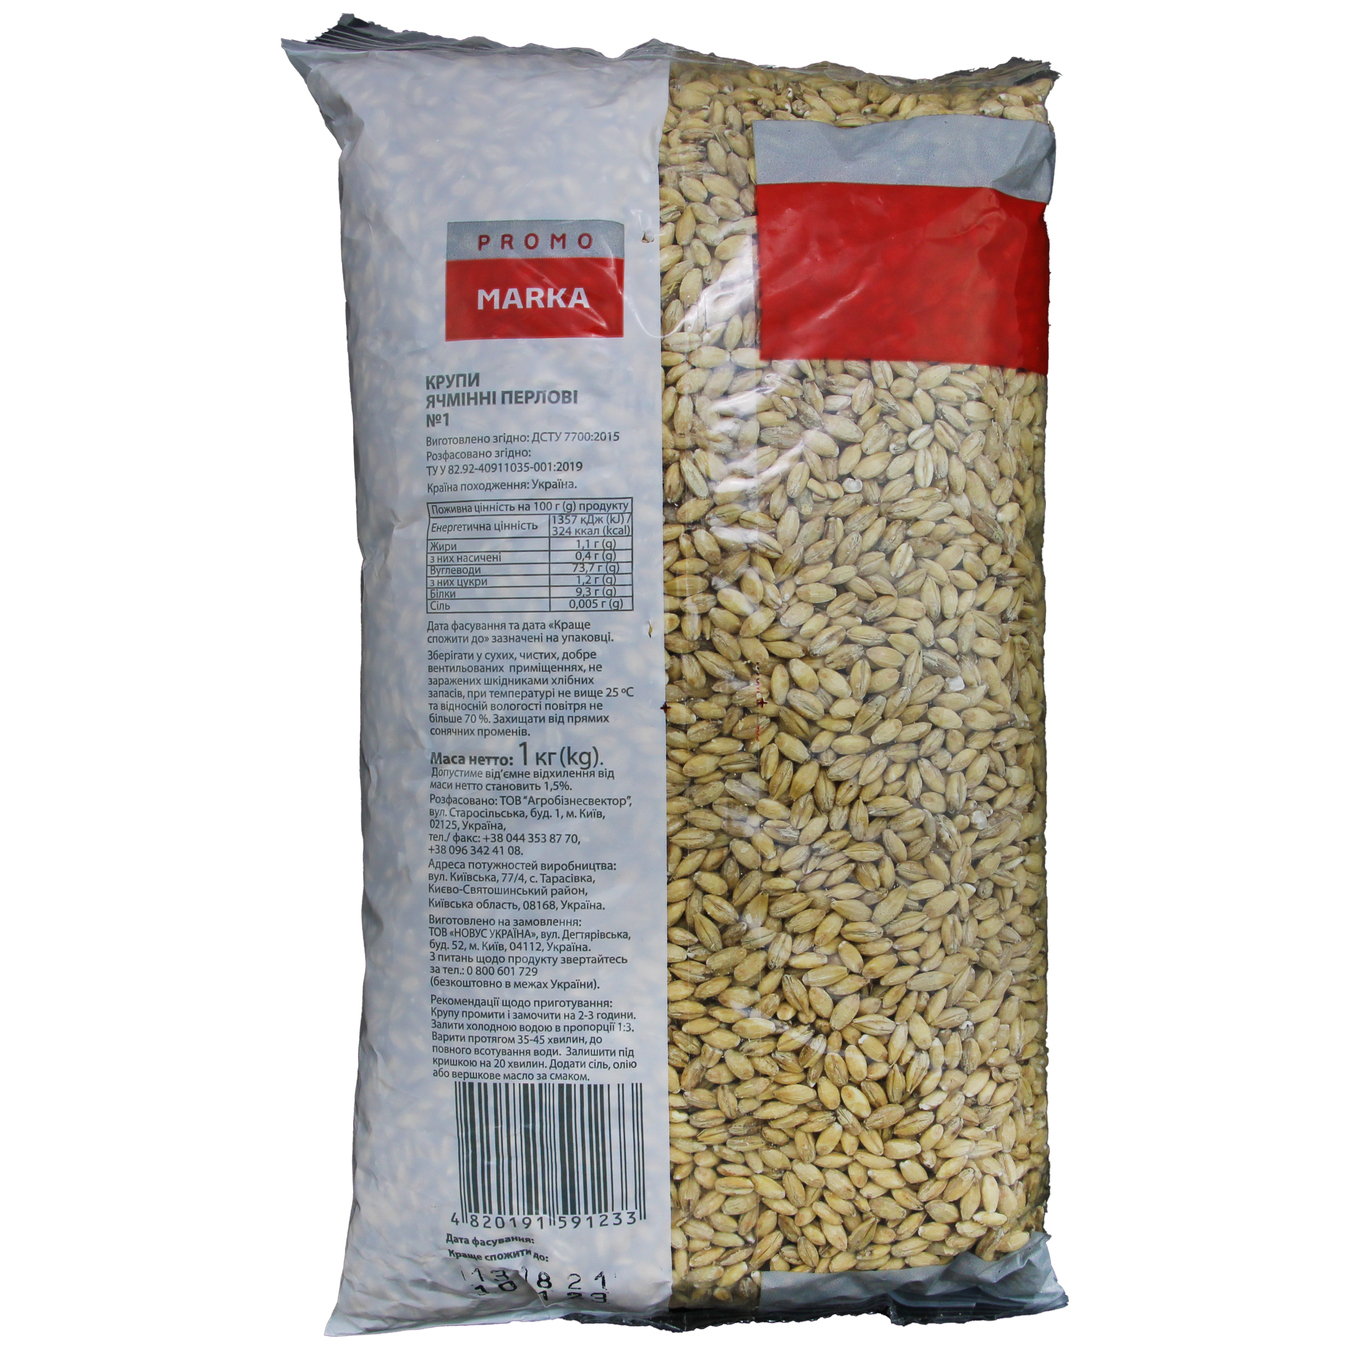 Marka Promo Pearl Barley Groats 1kg 2